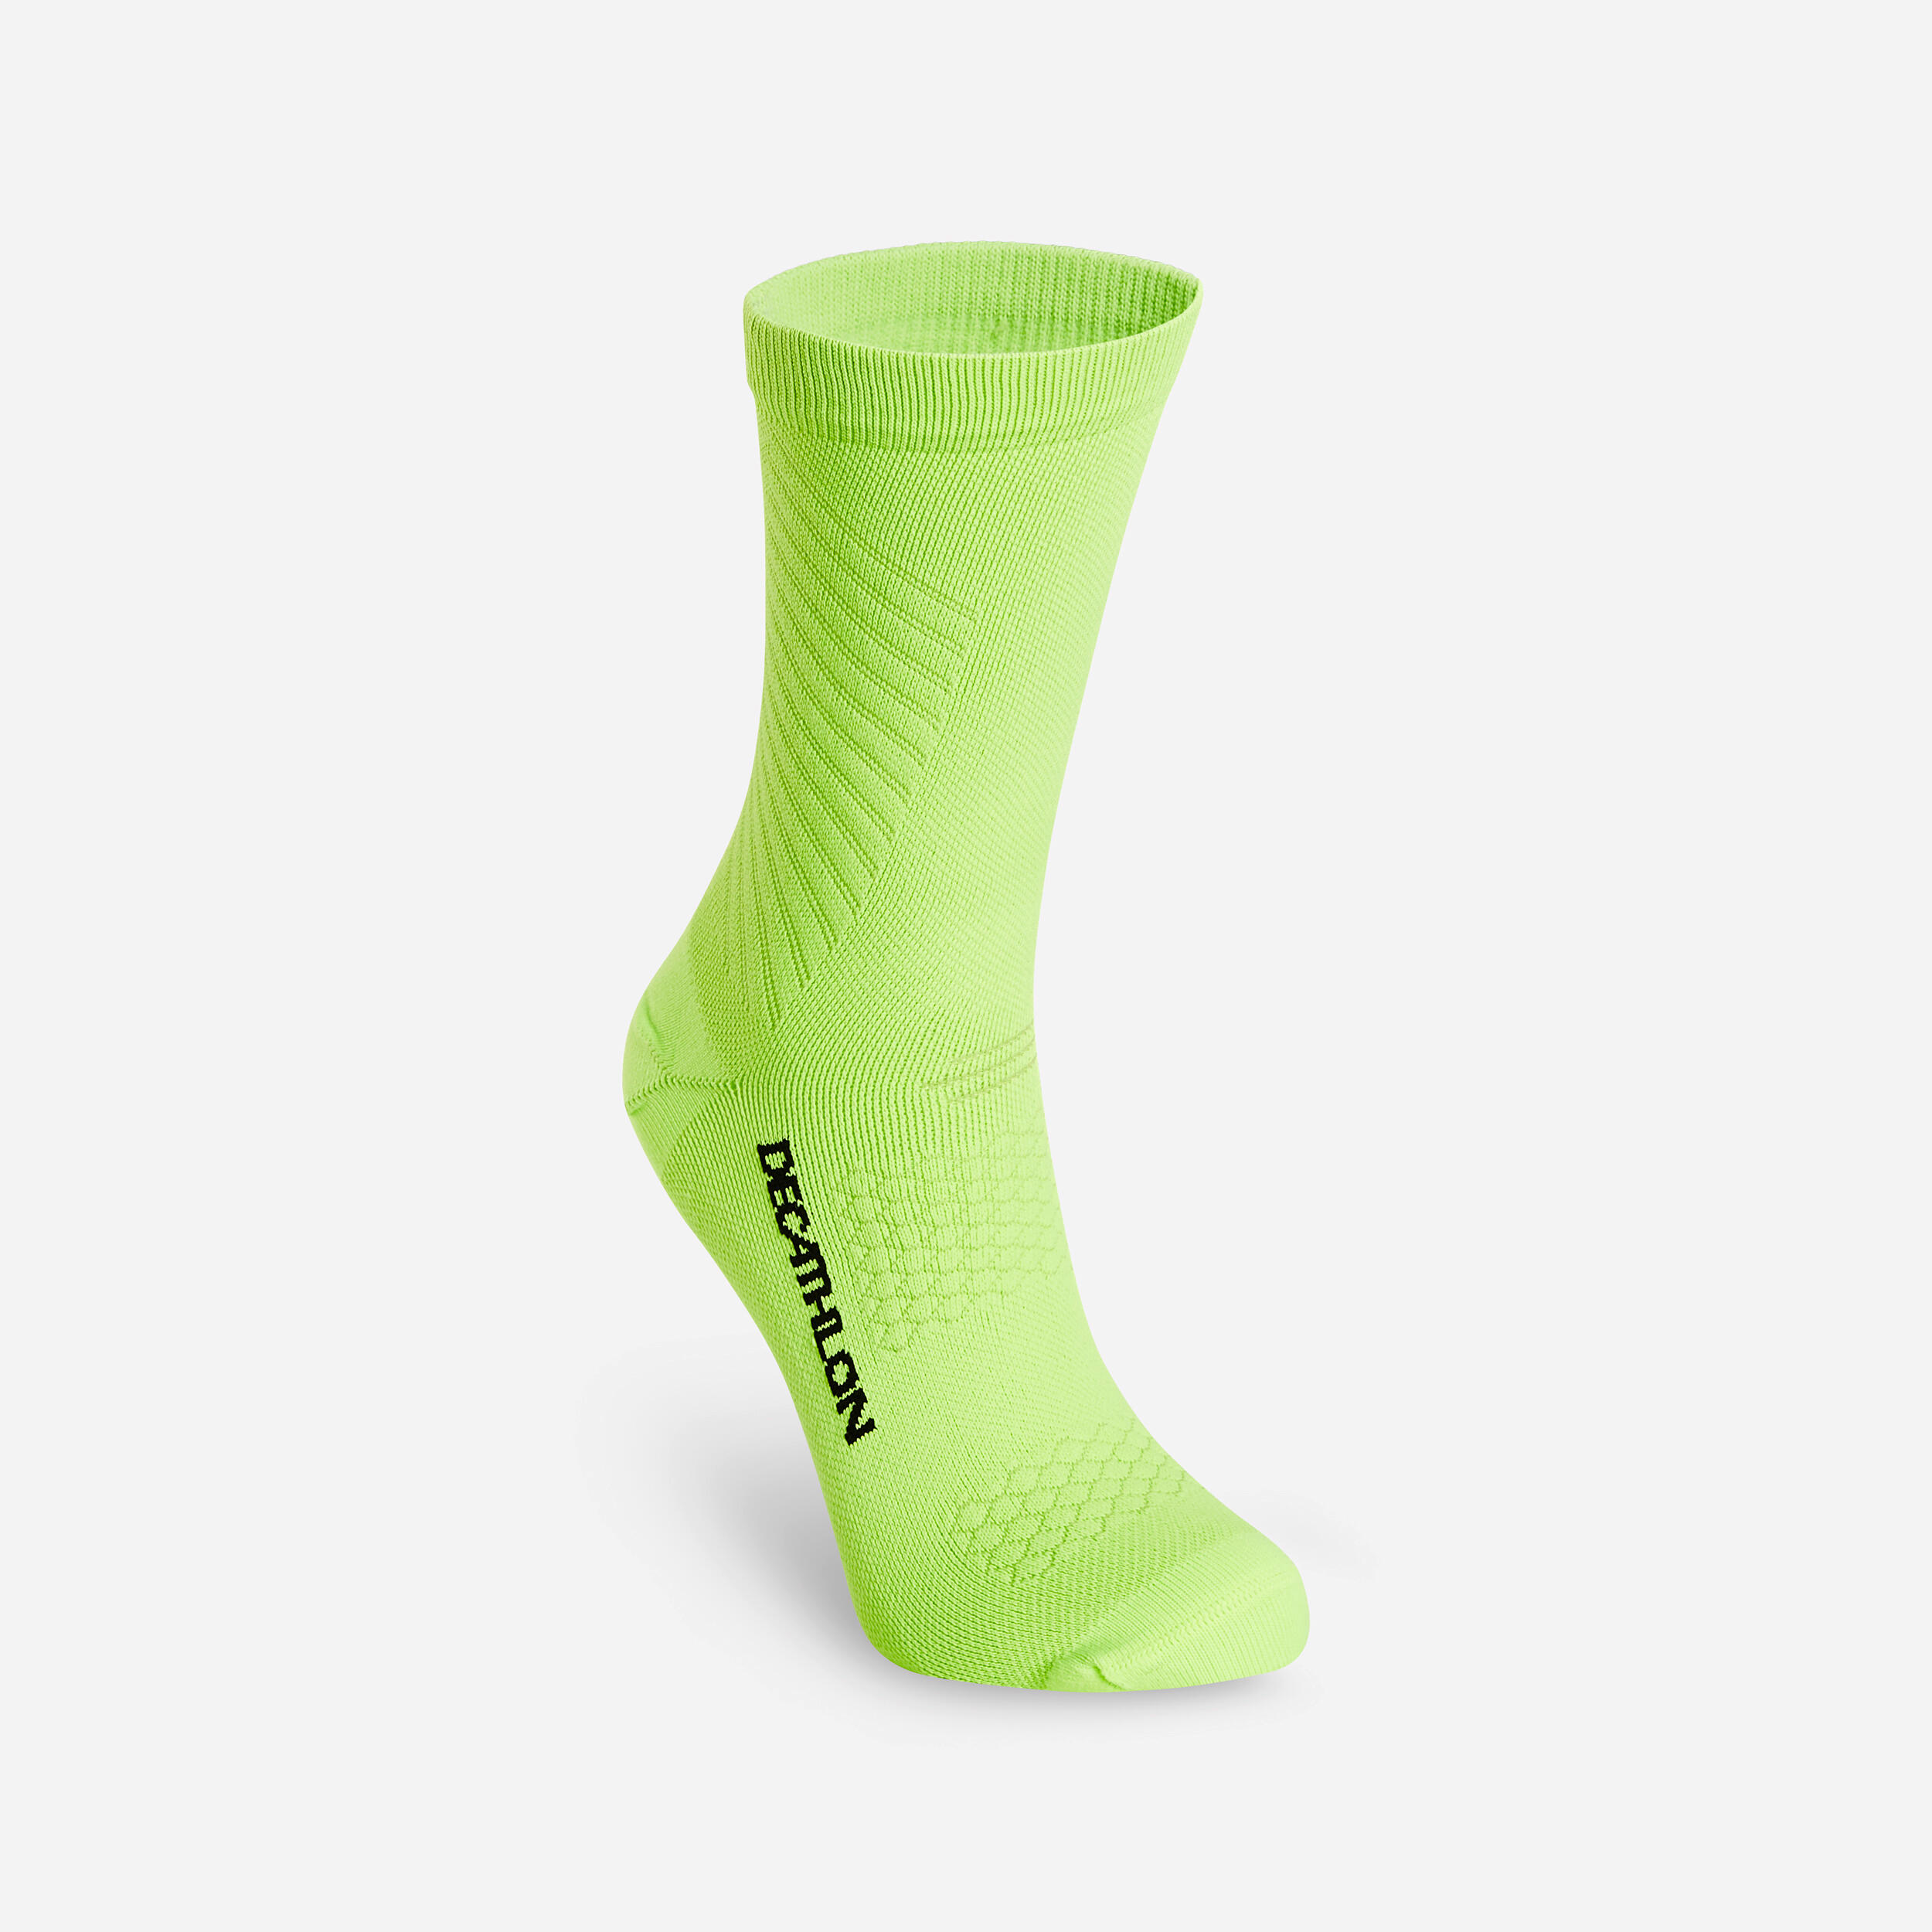 RoadR 900 cycling socks - Fluo lime yellow‎ - Van rysel - Decathlon